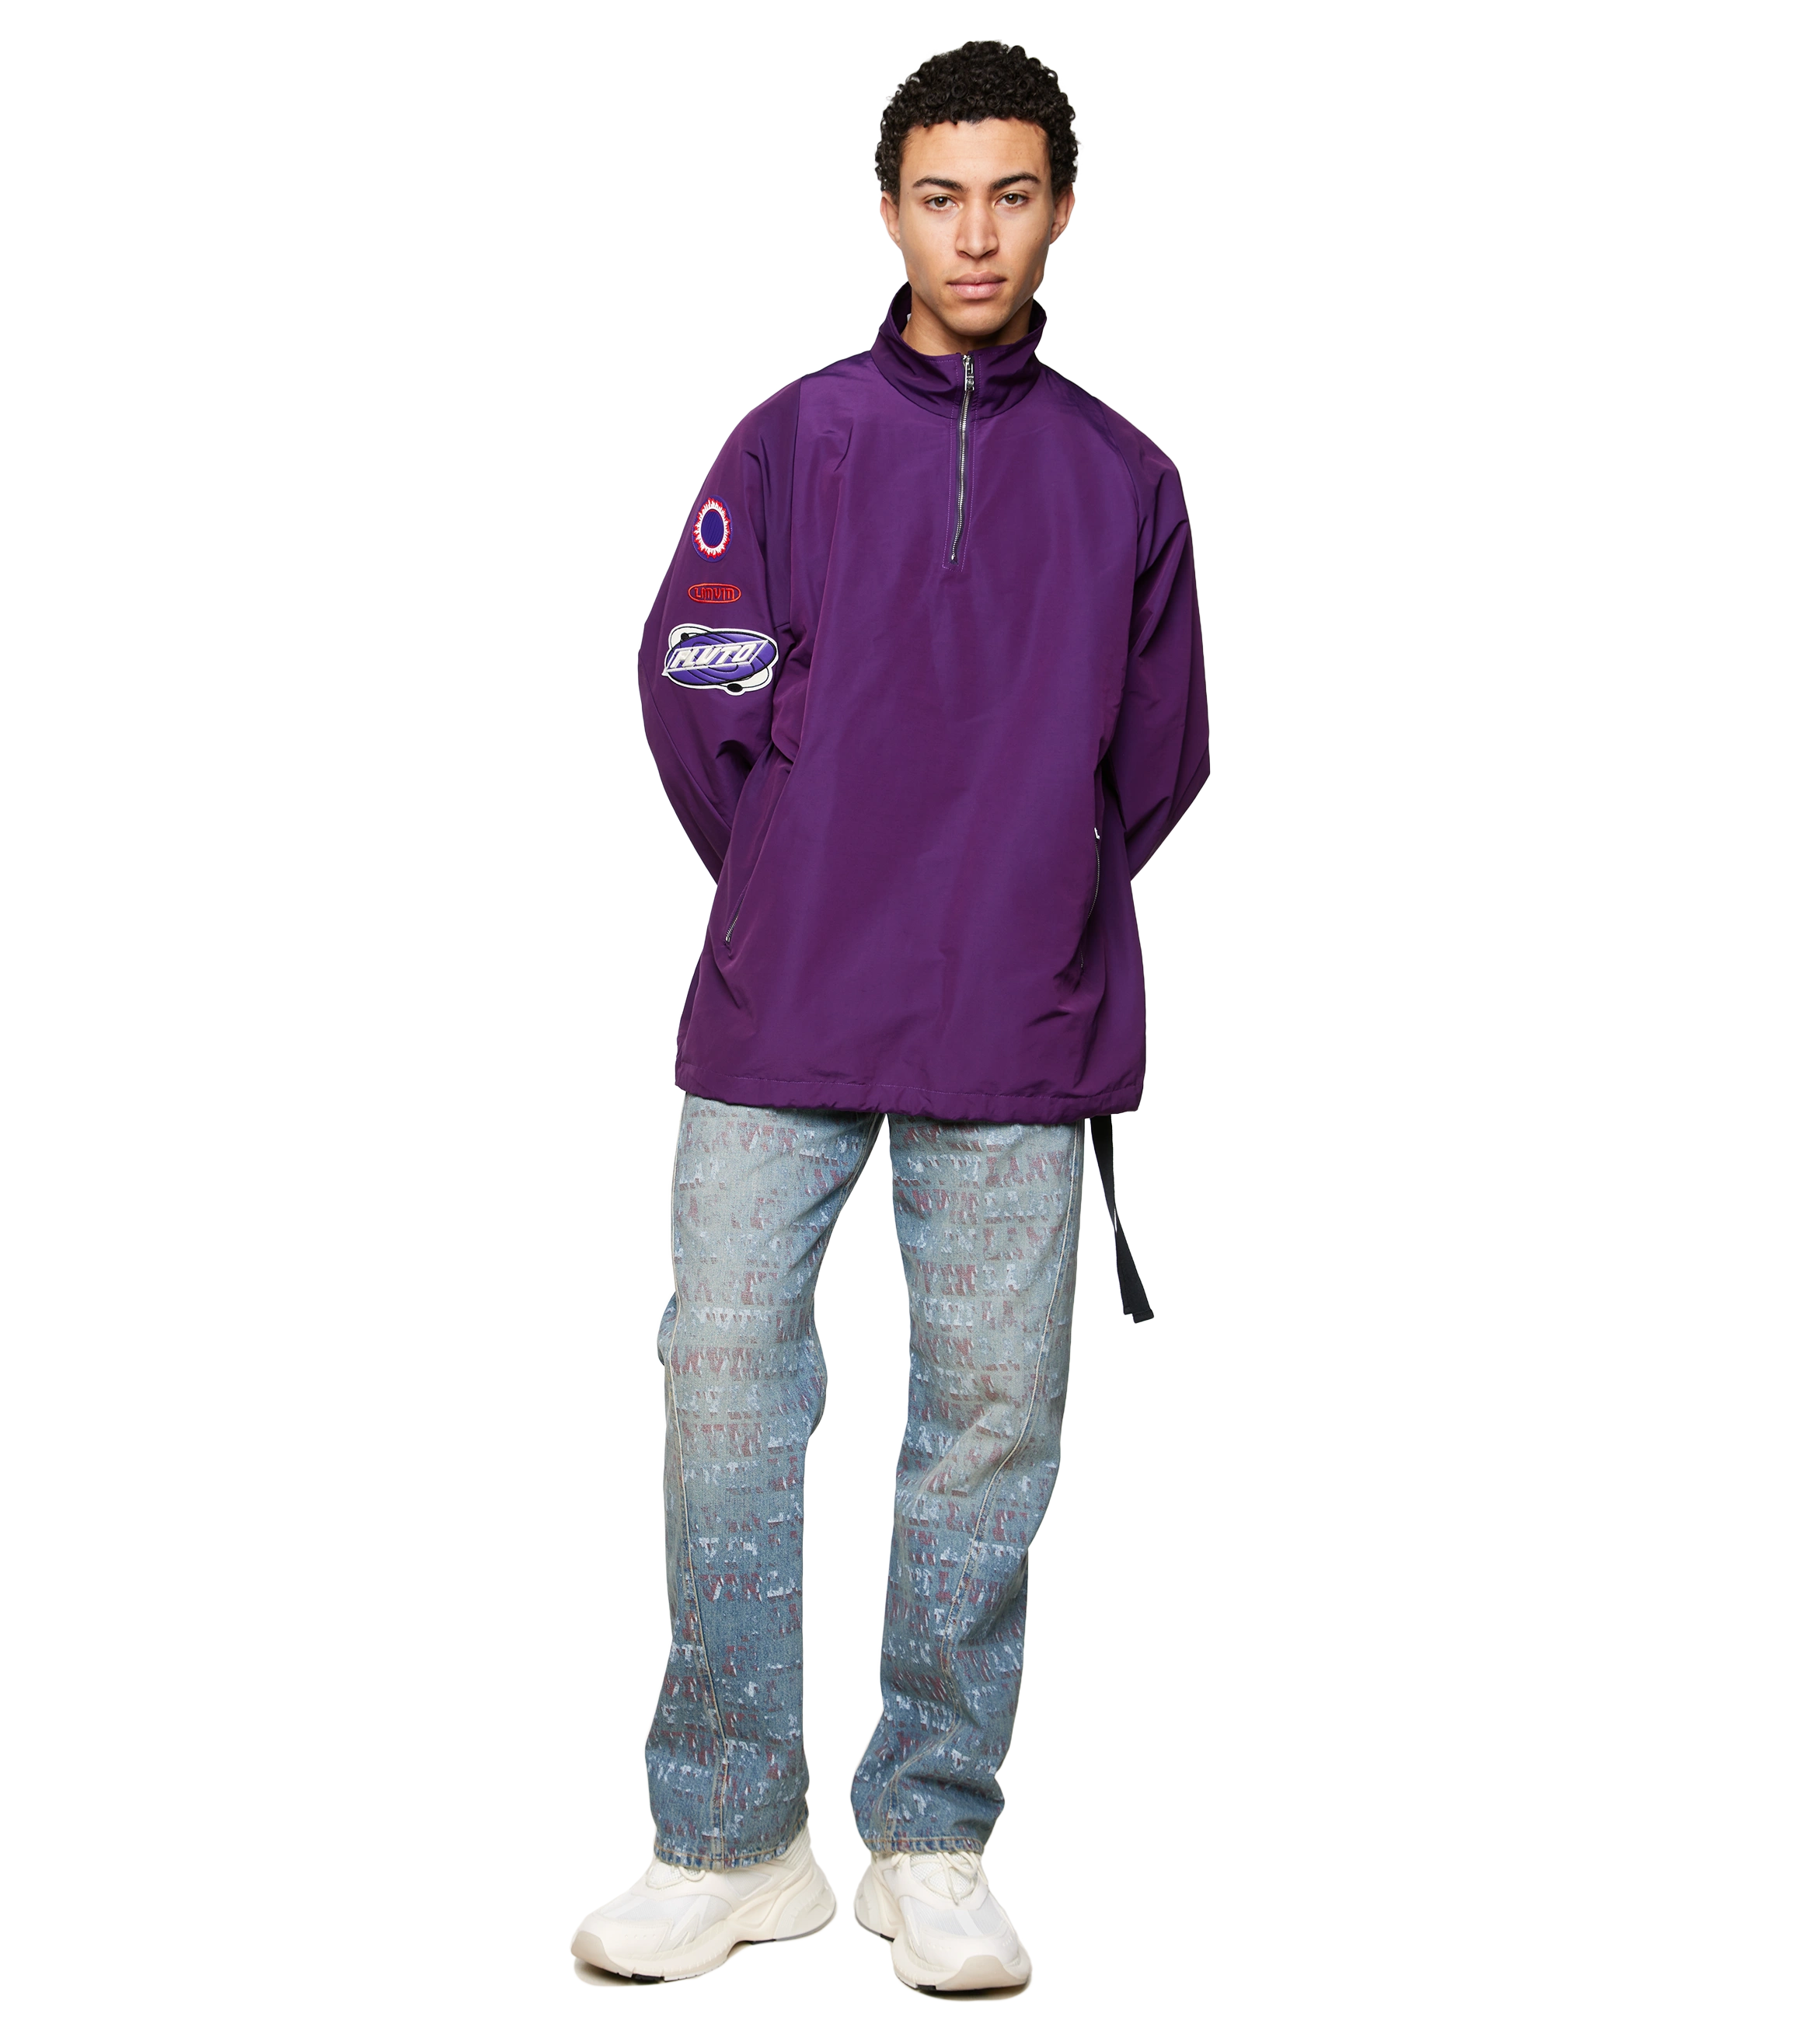 Future x Lanvin Zipped Jacket Purple